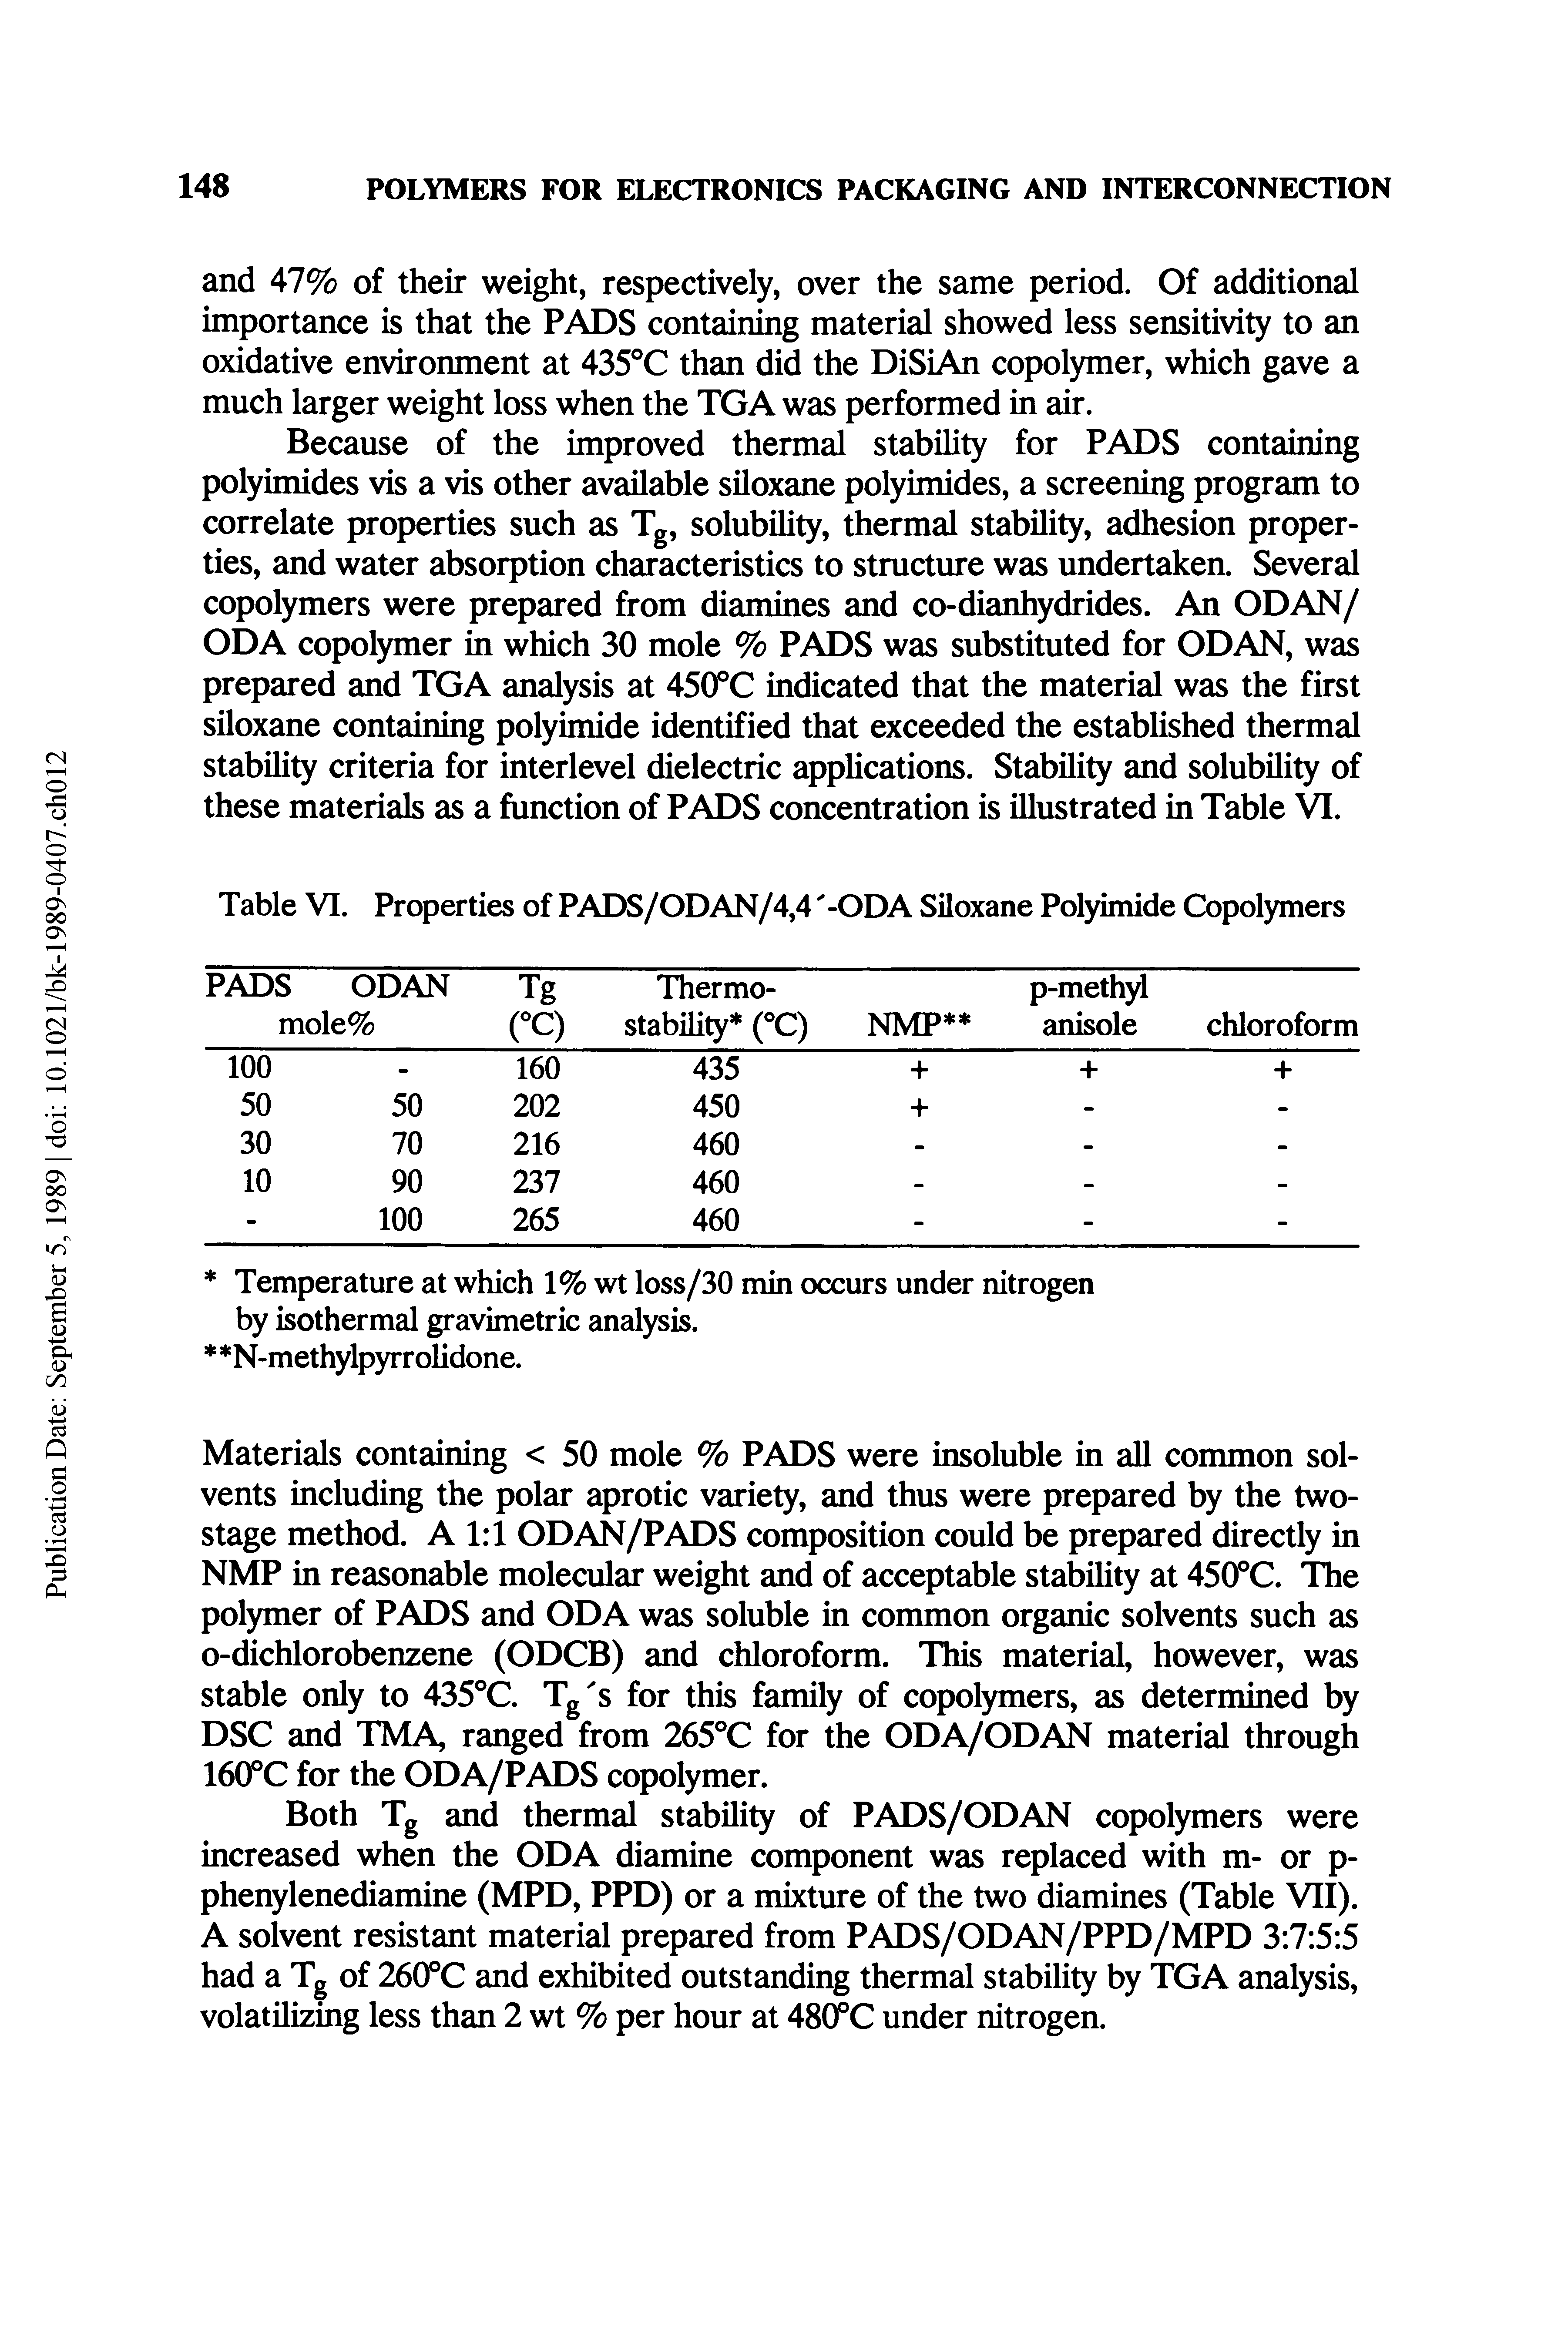 Table VI. Properties of PADS/ODAN/4,4 -ODA Siloxane Polyimide Copolymers...